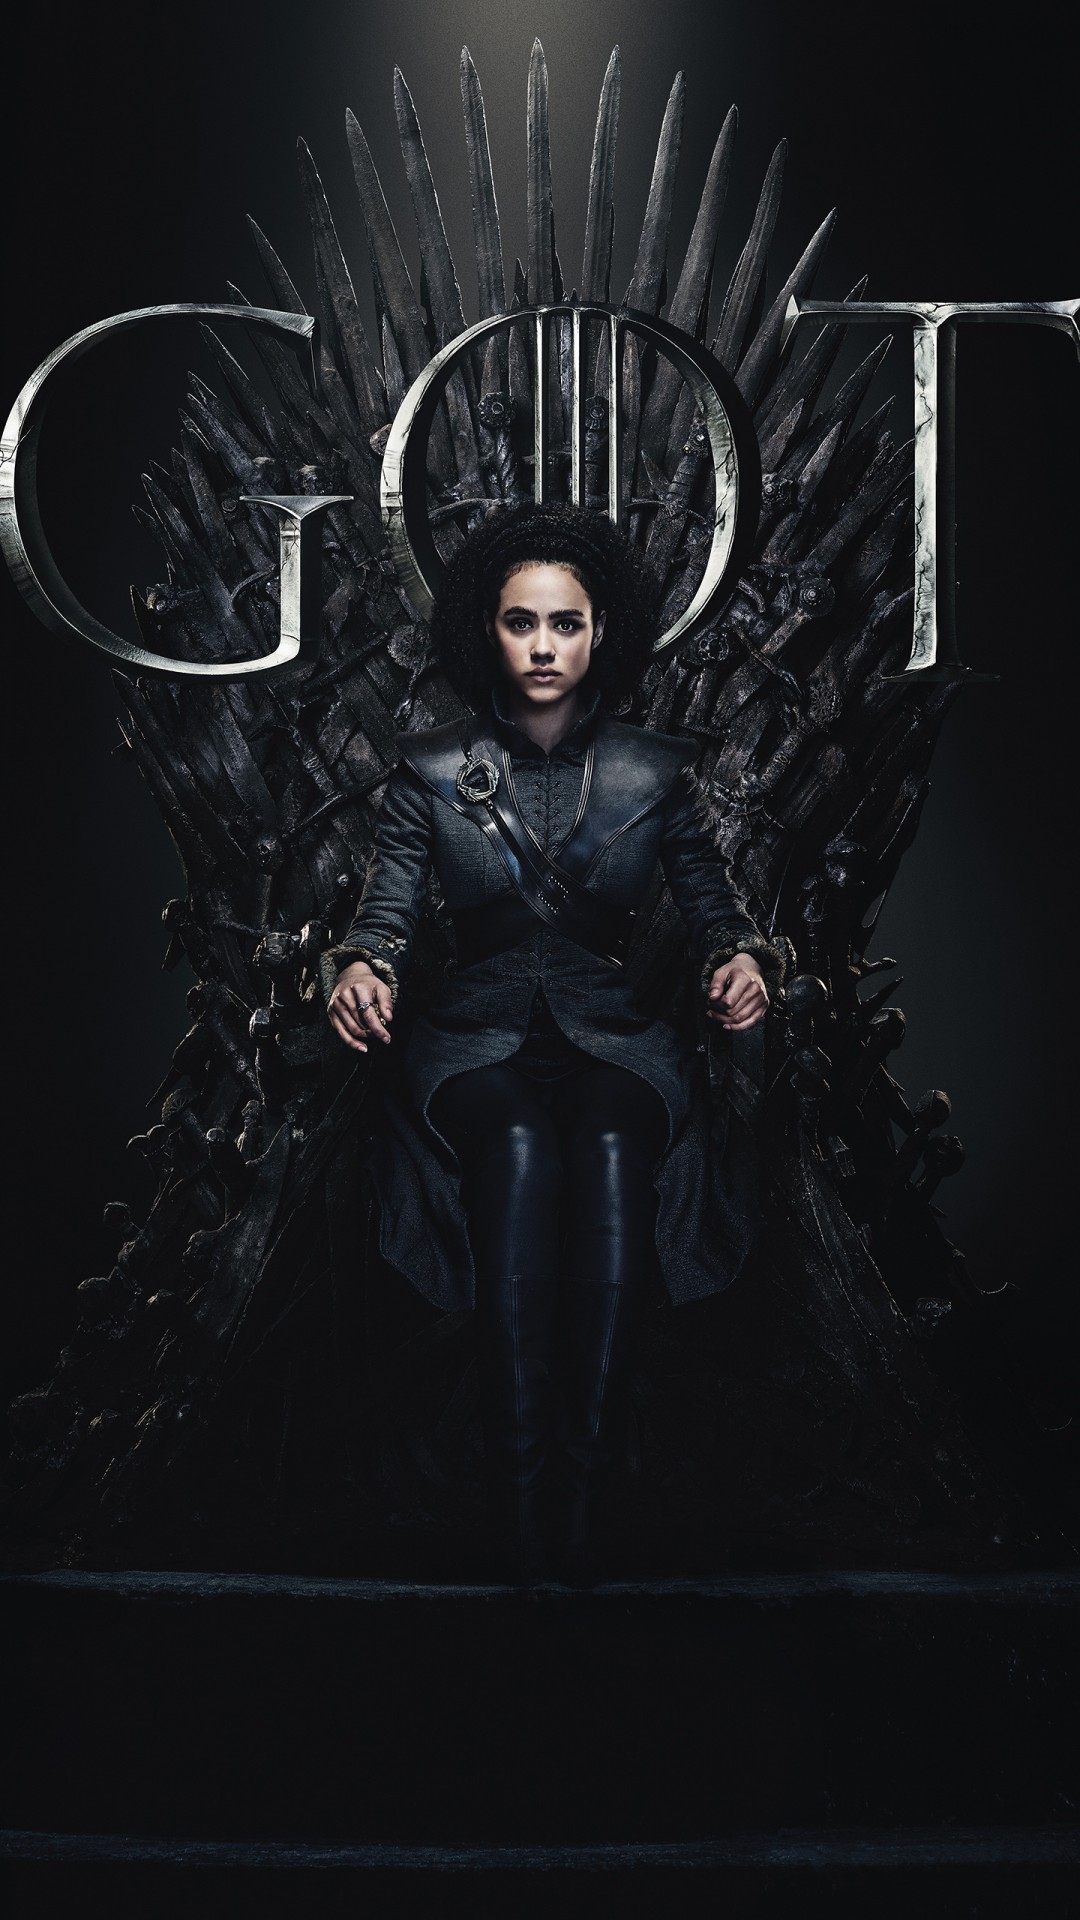 game of thrones season 6 wallpaper,darkness,fashion,album cover,chair,gothic fashion